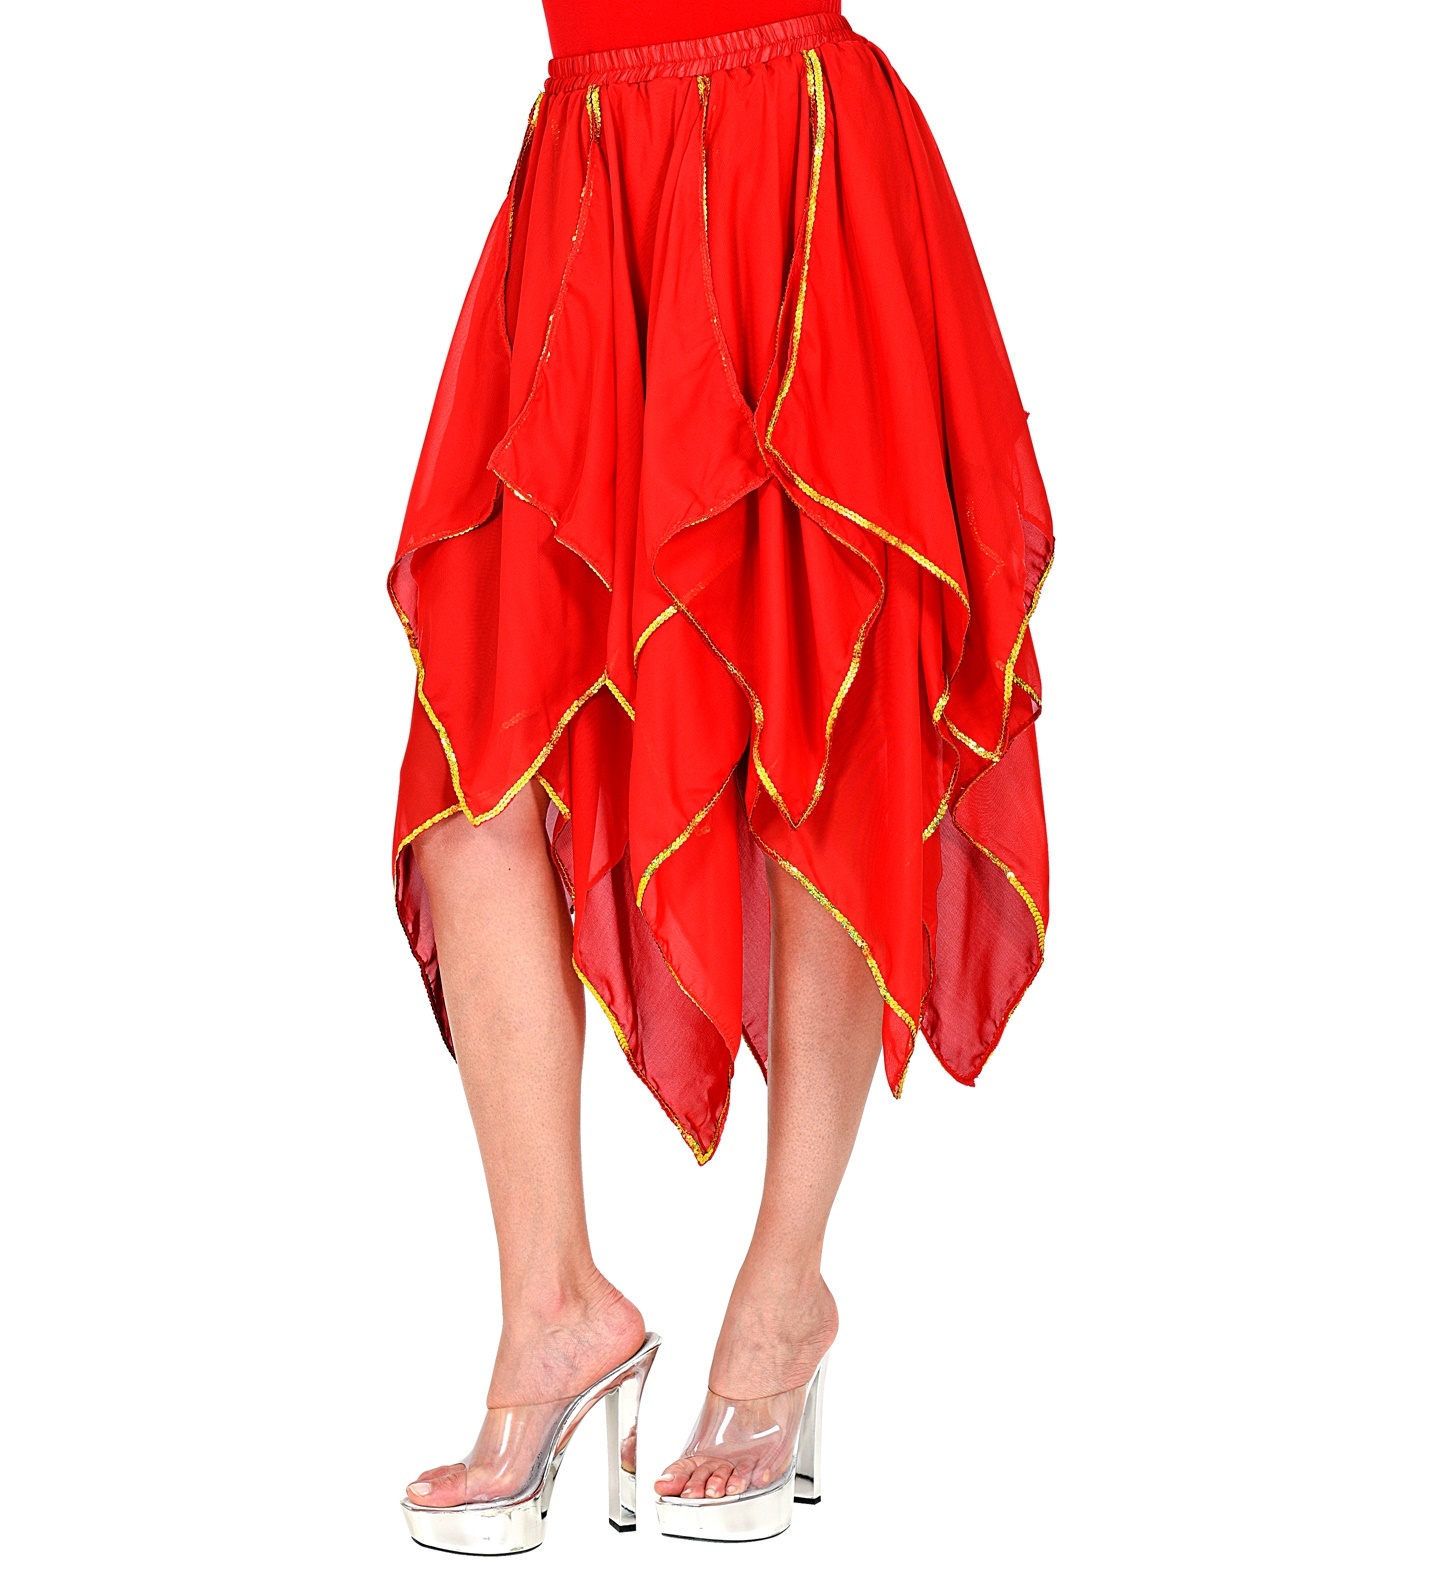 Widmann - 1001 Nacht & Arabisch & Midden-Oosten Kostuum - Zwierige Rode Rok Van Chiffon Vrouw - rood - One Size - Halloween - Verkleedkleding